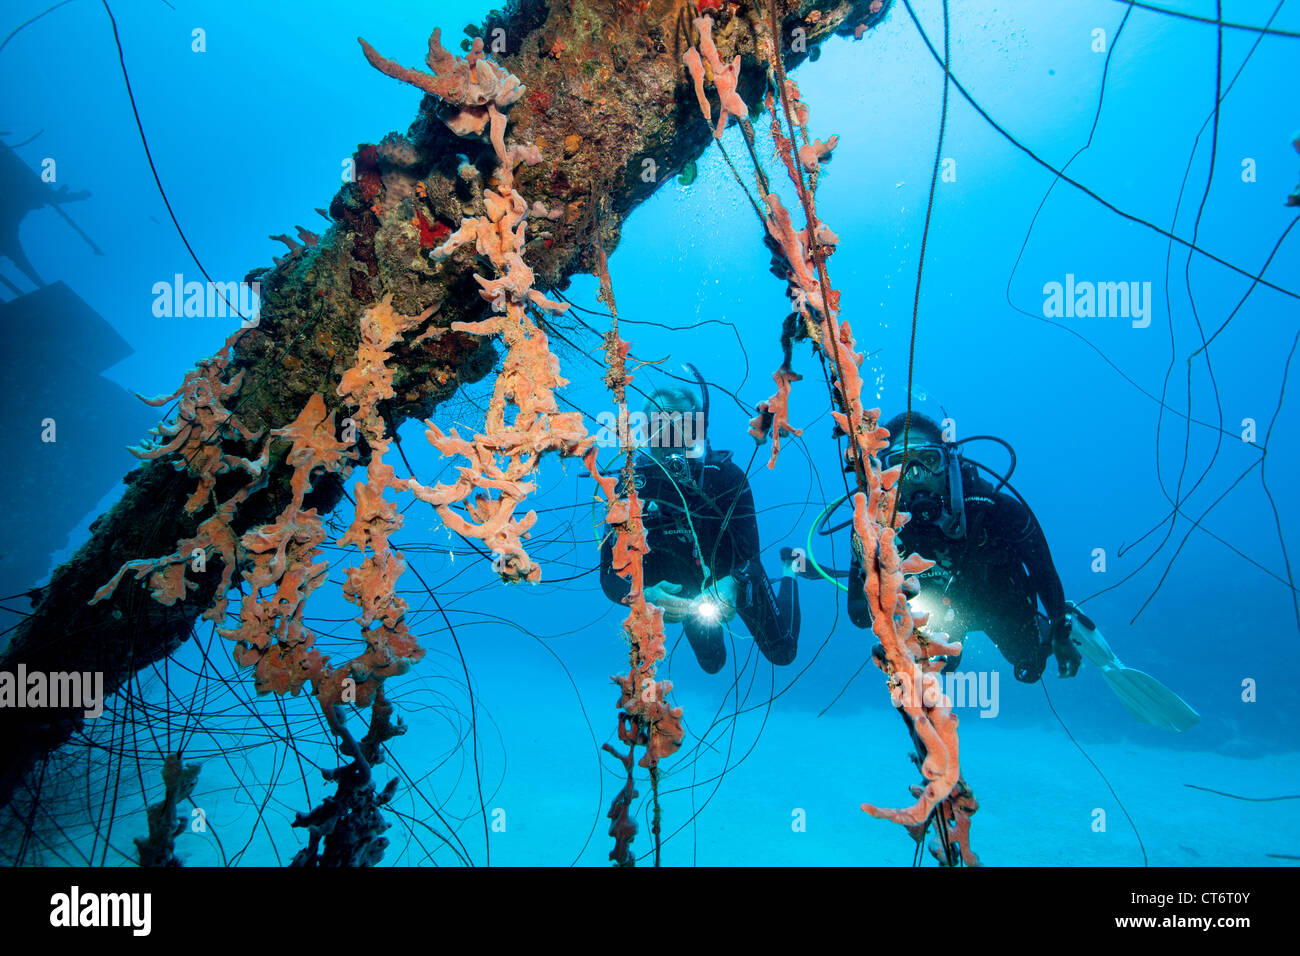 Scuba divers on shipwreck Stock Photo